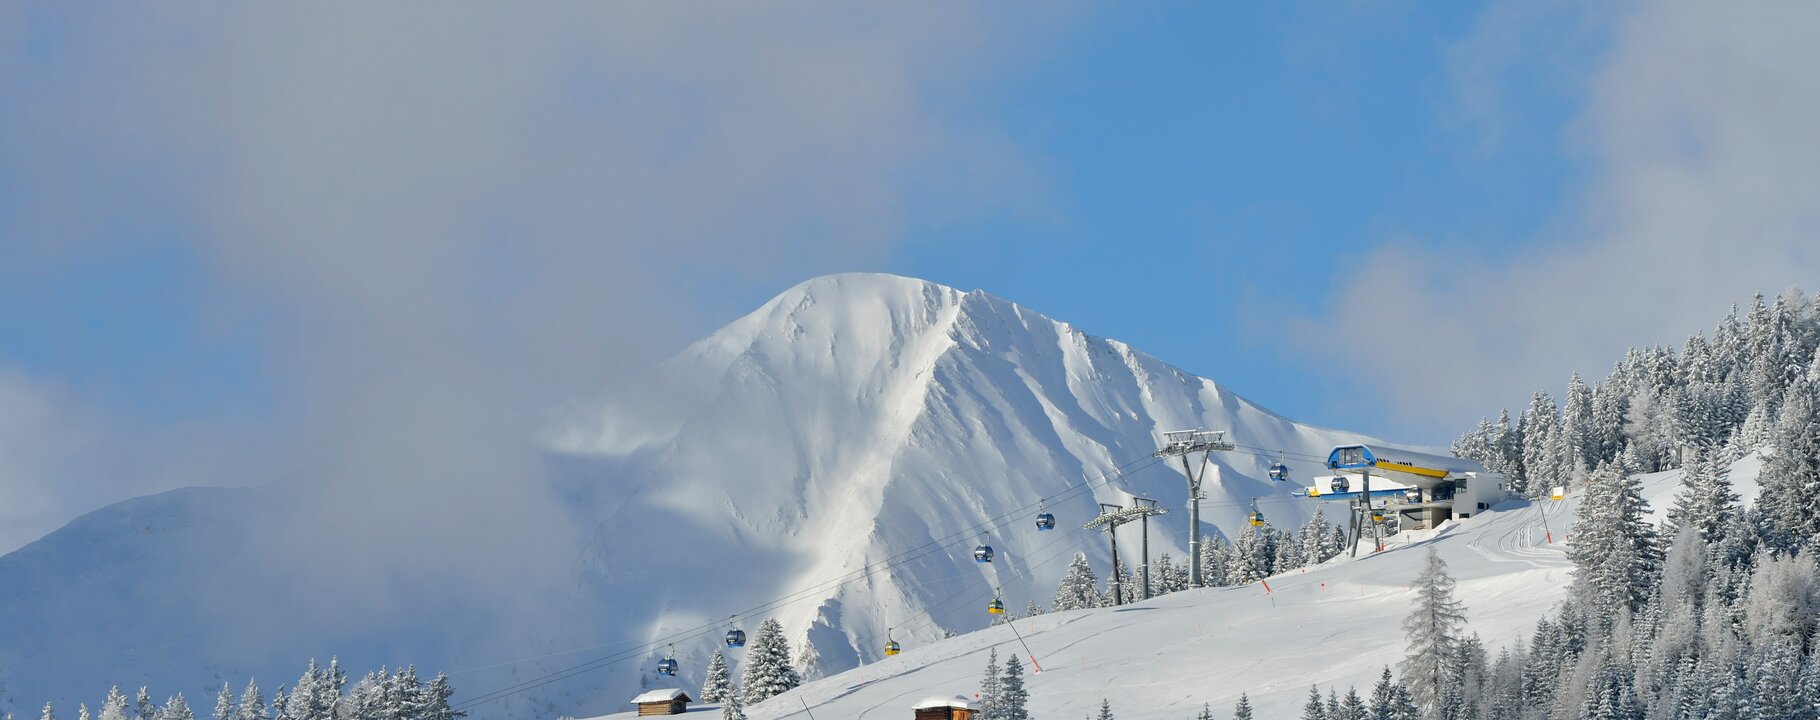 Waldbahn in winter with snow in Serfaus-Fiss-Ladis, Tyrol, Austria | © Serfaus-Fiss-Ladis Marketing GmbH